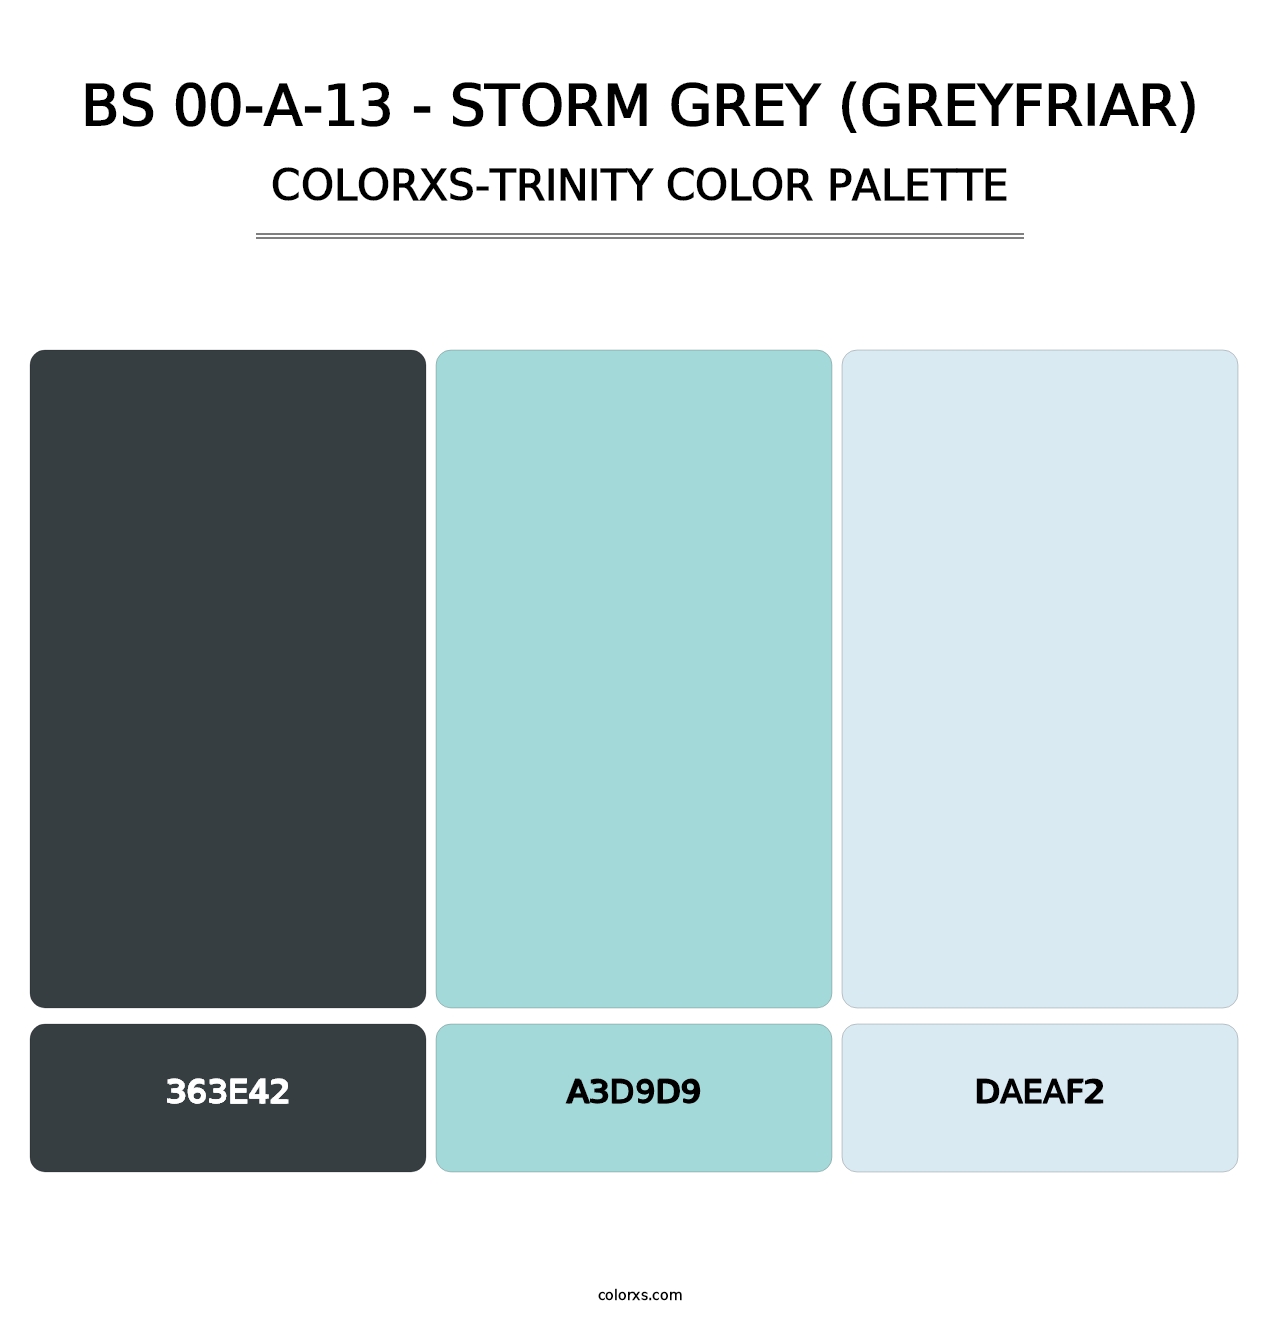 BS 00-A-13 - Storm Grey (Greyfriar) - Colorxs Trinity Palette